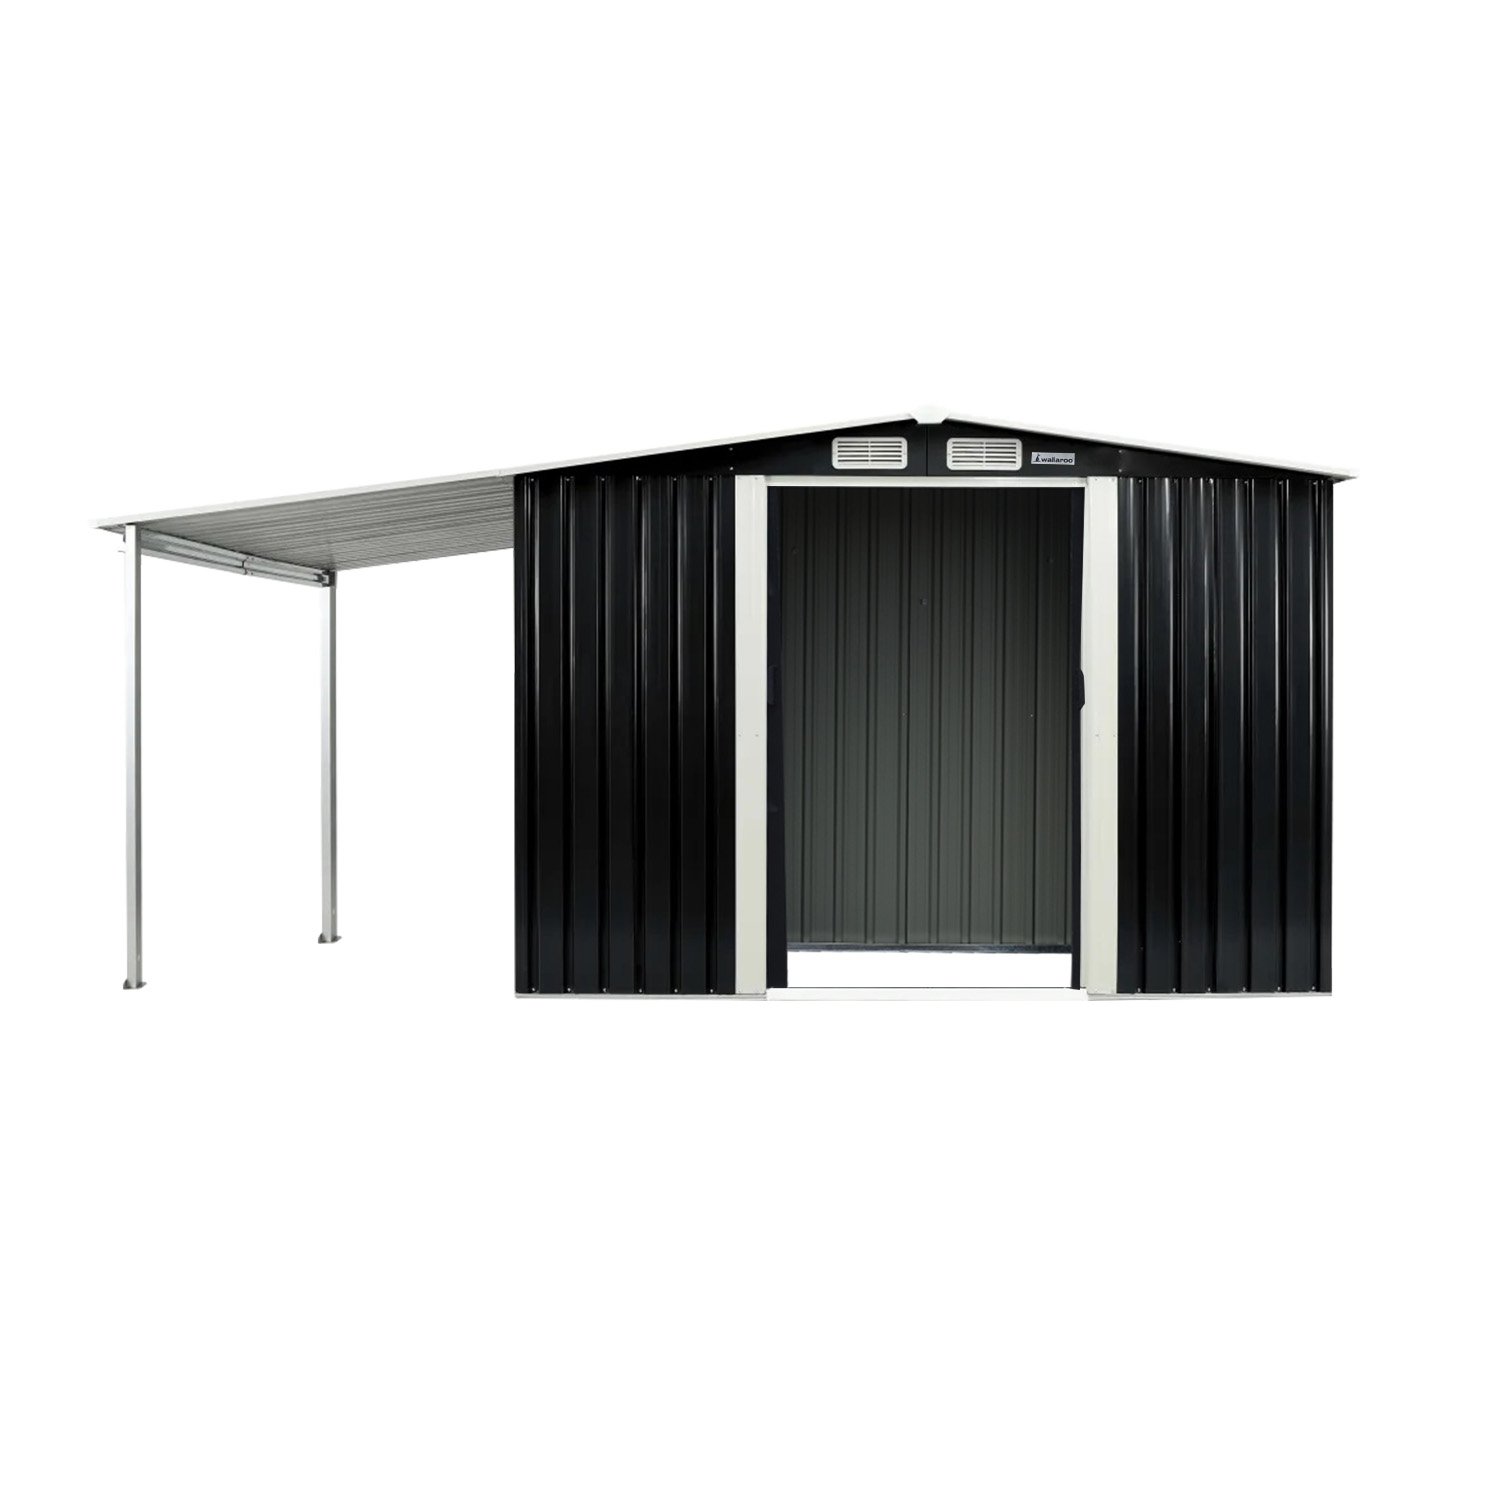 Wallaroo 10x8ft Zinc Steel Garden Shed with Open Storage - Black 2